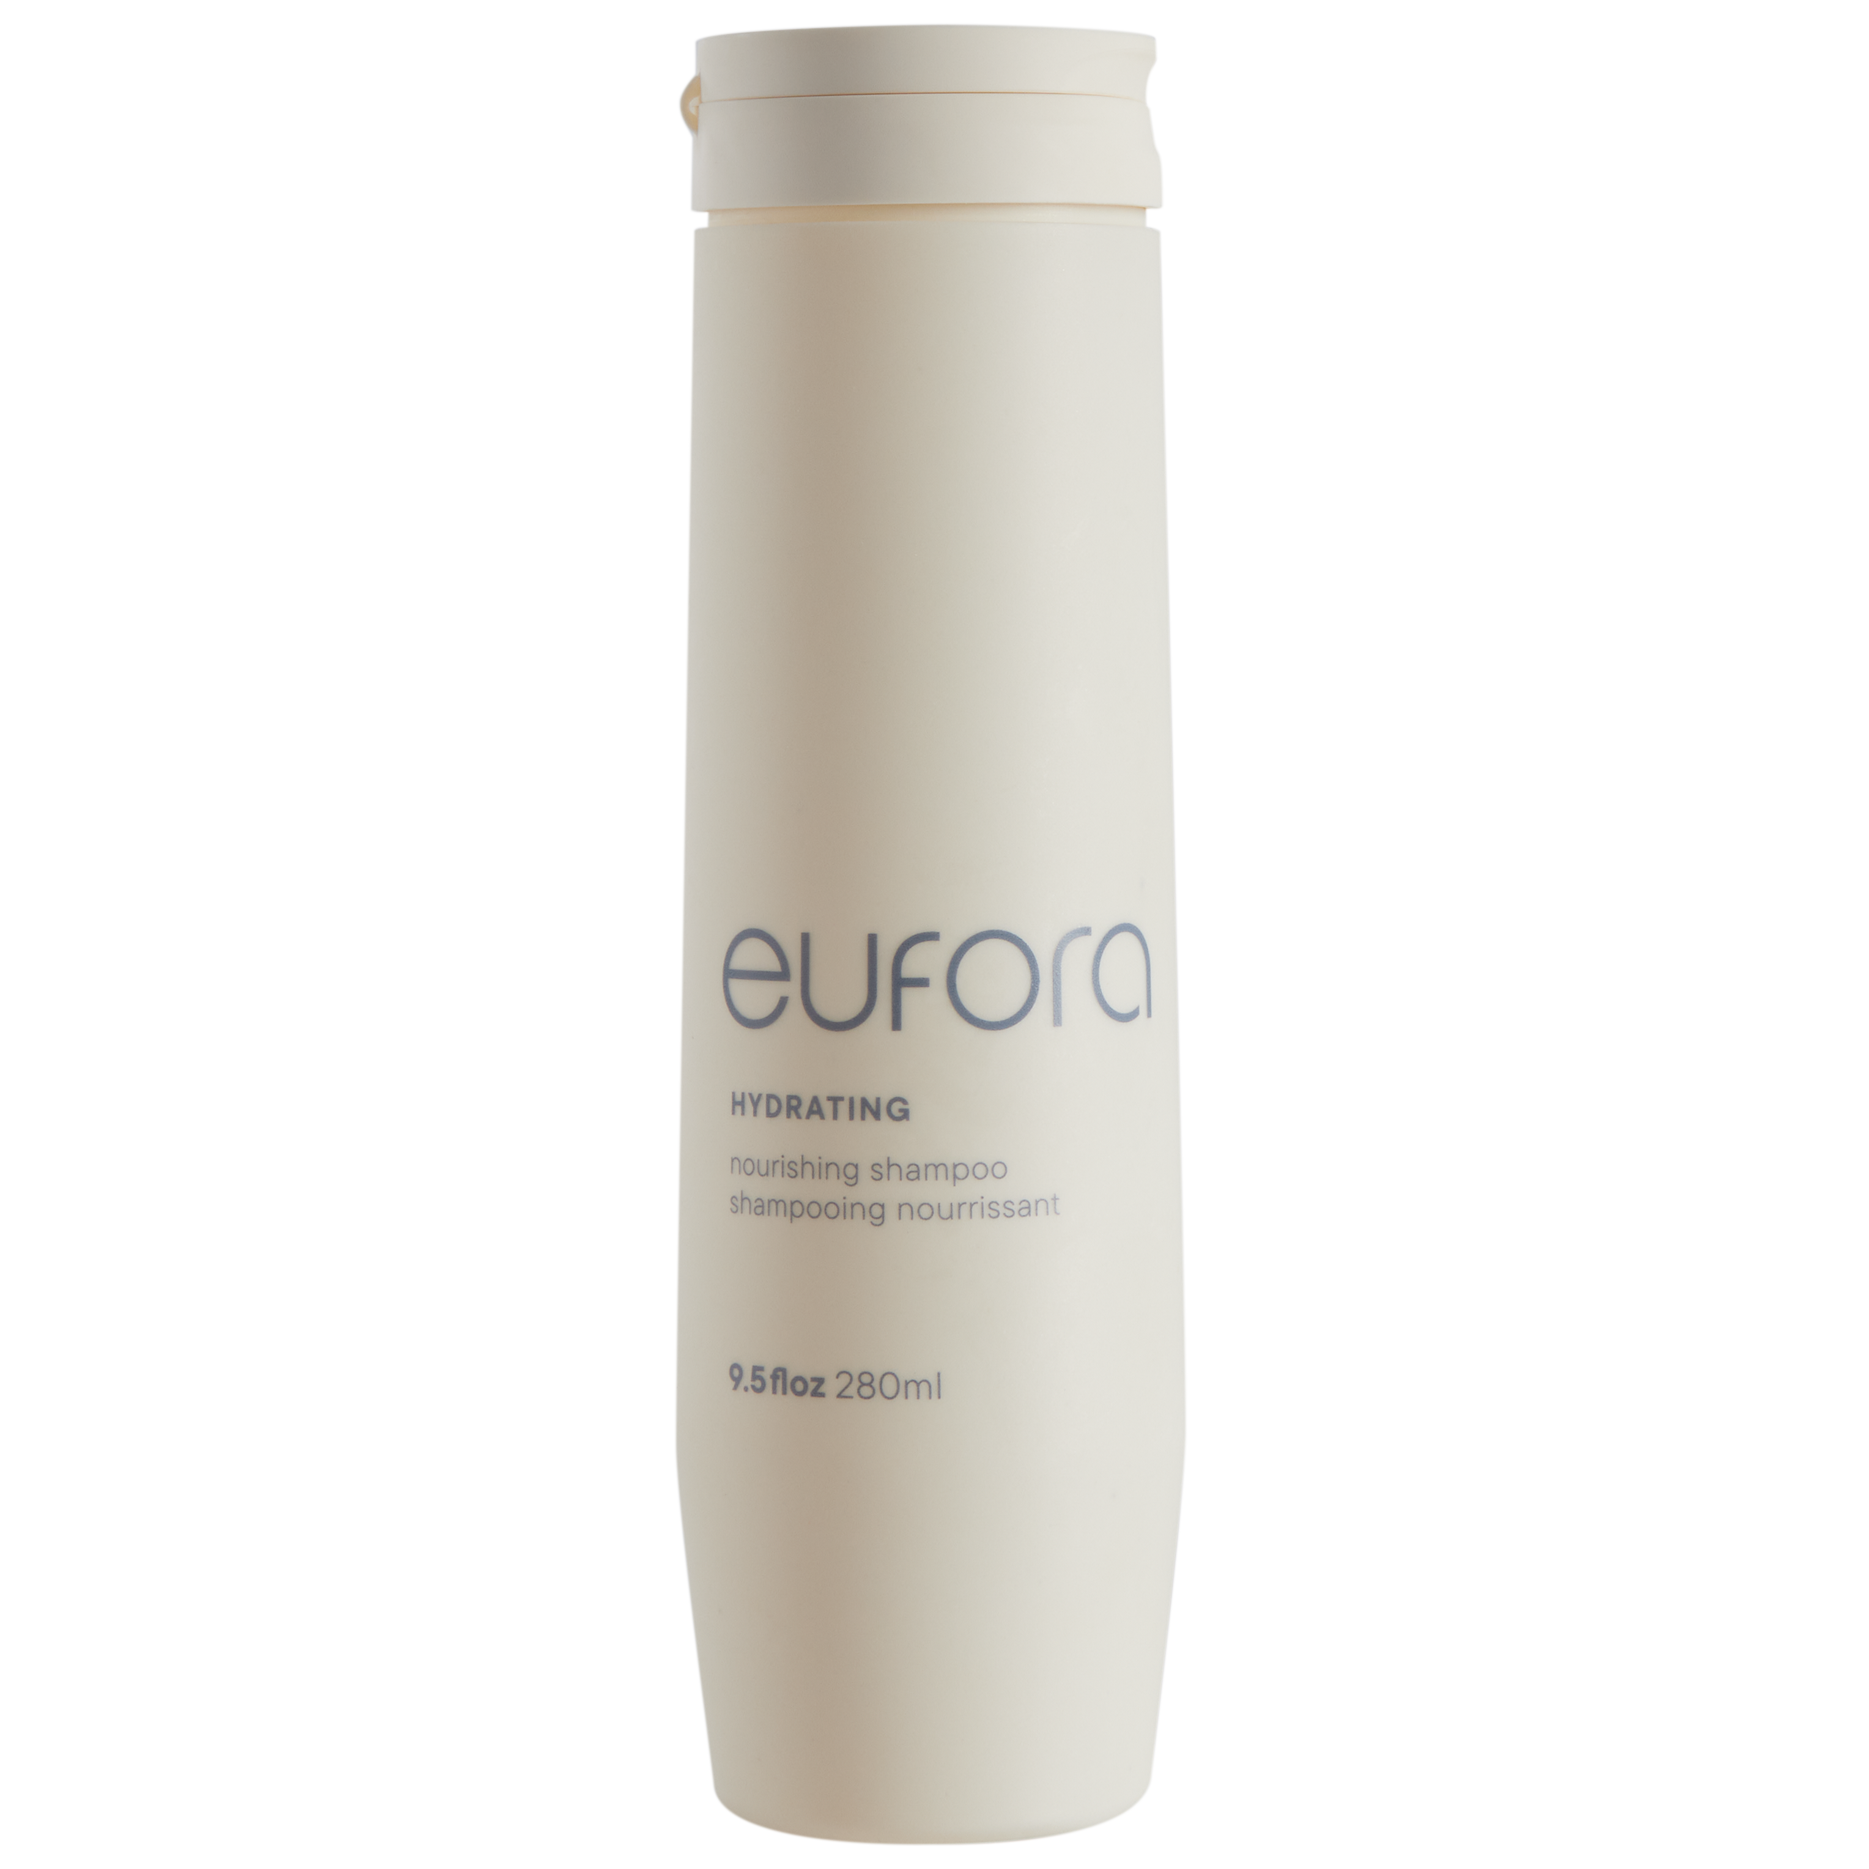 Eufora HYDRATING Nourishing Shampoo 9.5oz